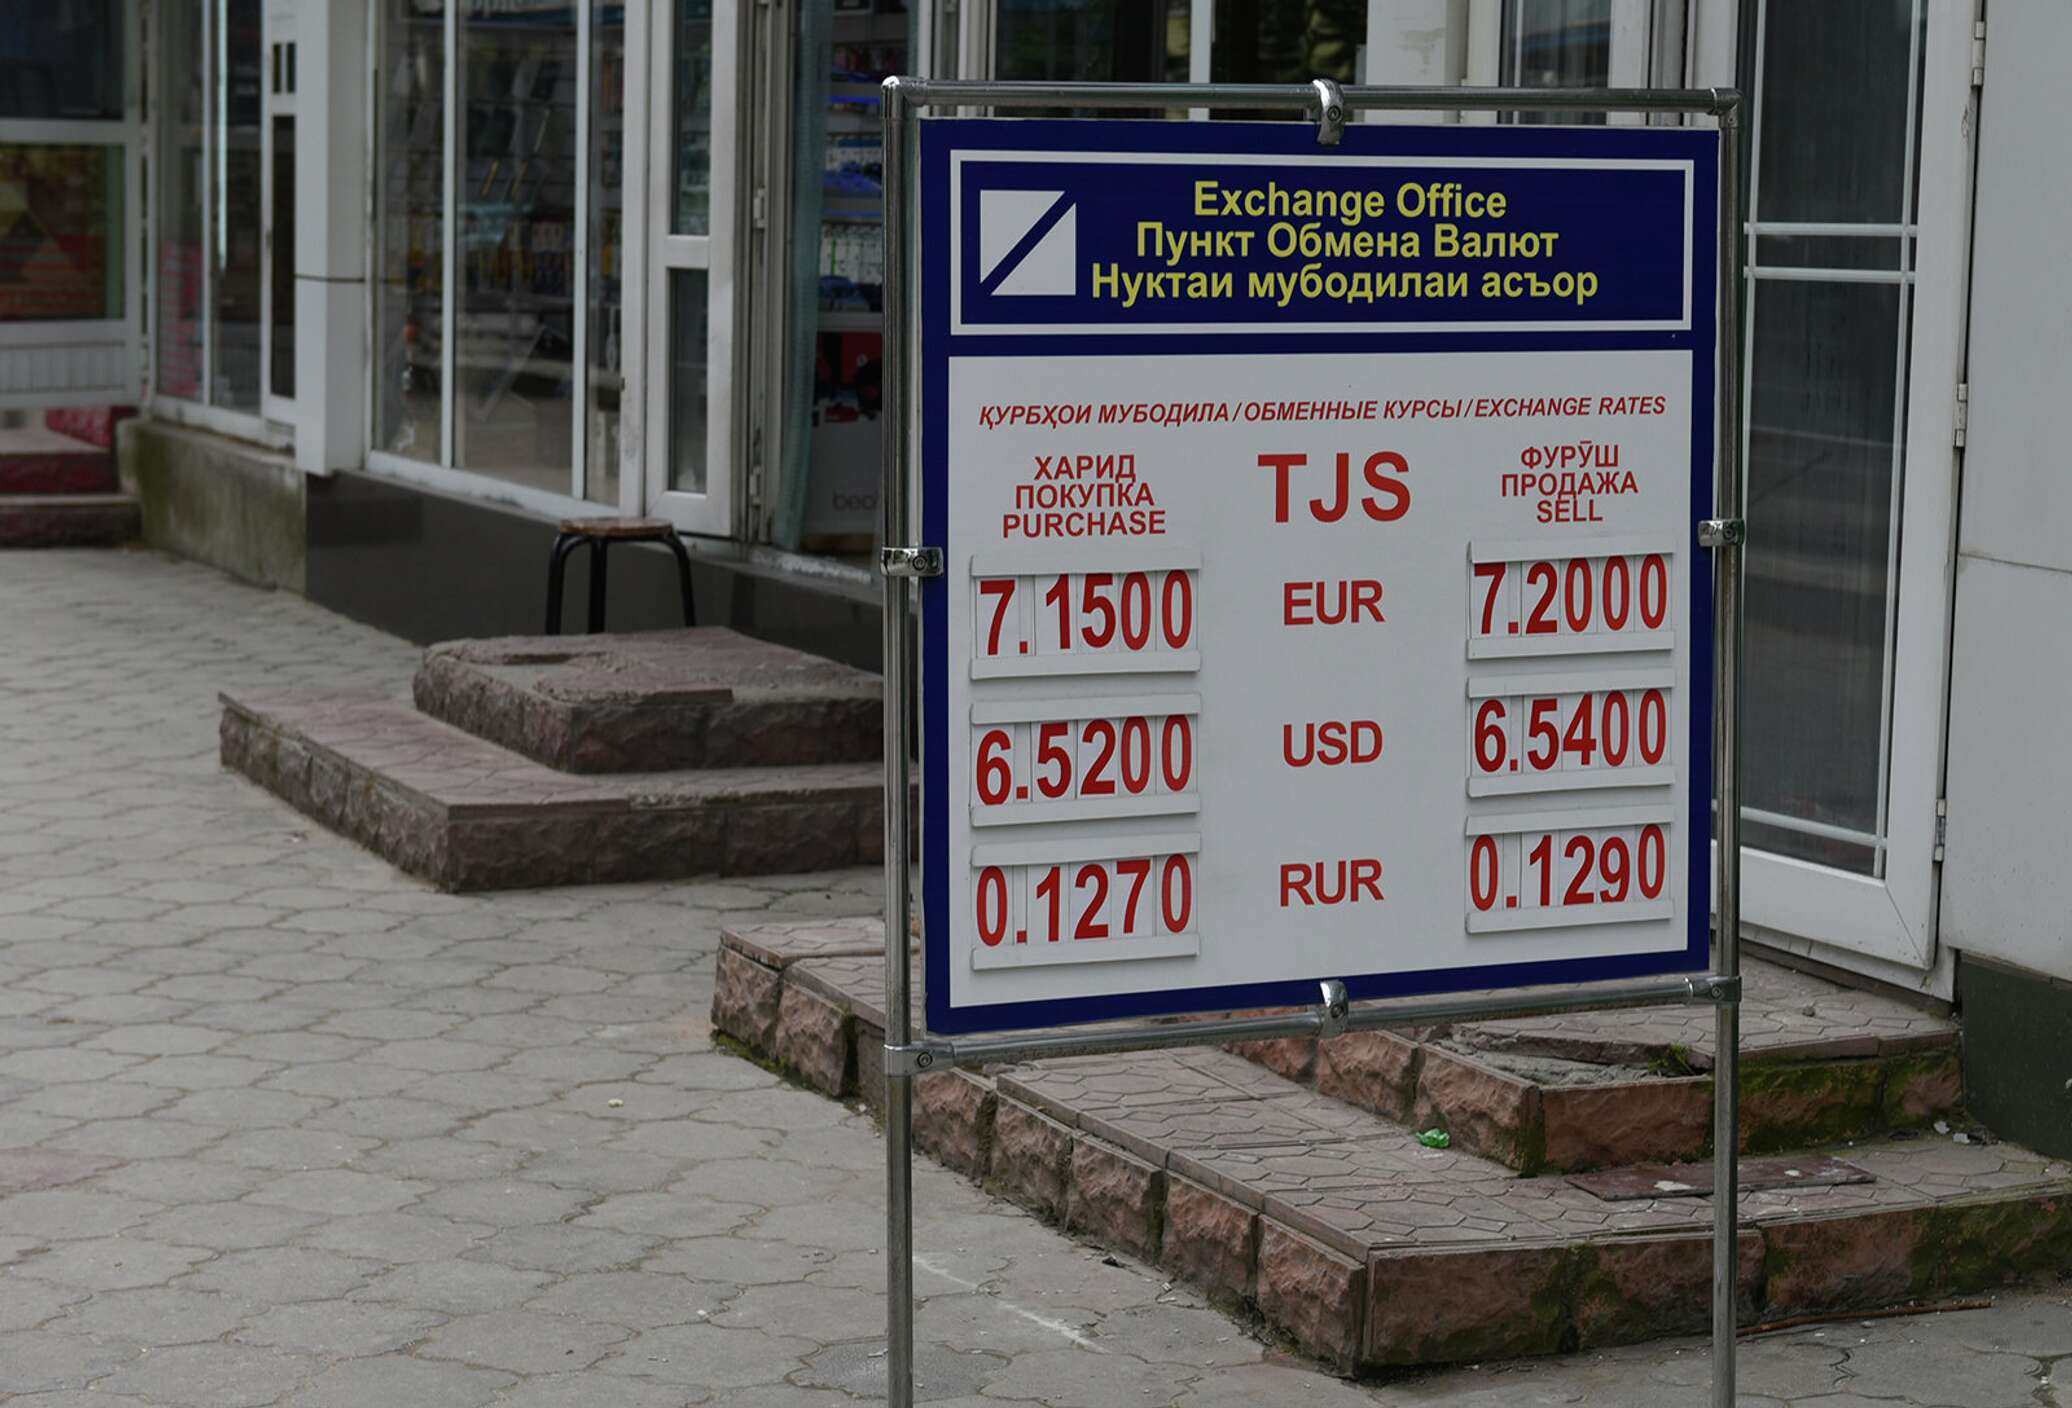 Валют рубл таджикистане сомони. Обменный пункт. Обменные пункты в Таджикистане. Курсы валют. Курсы валют в Таджикистане.